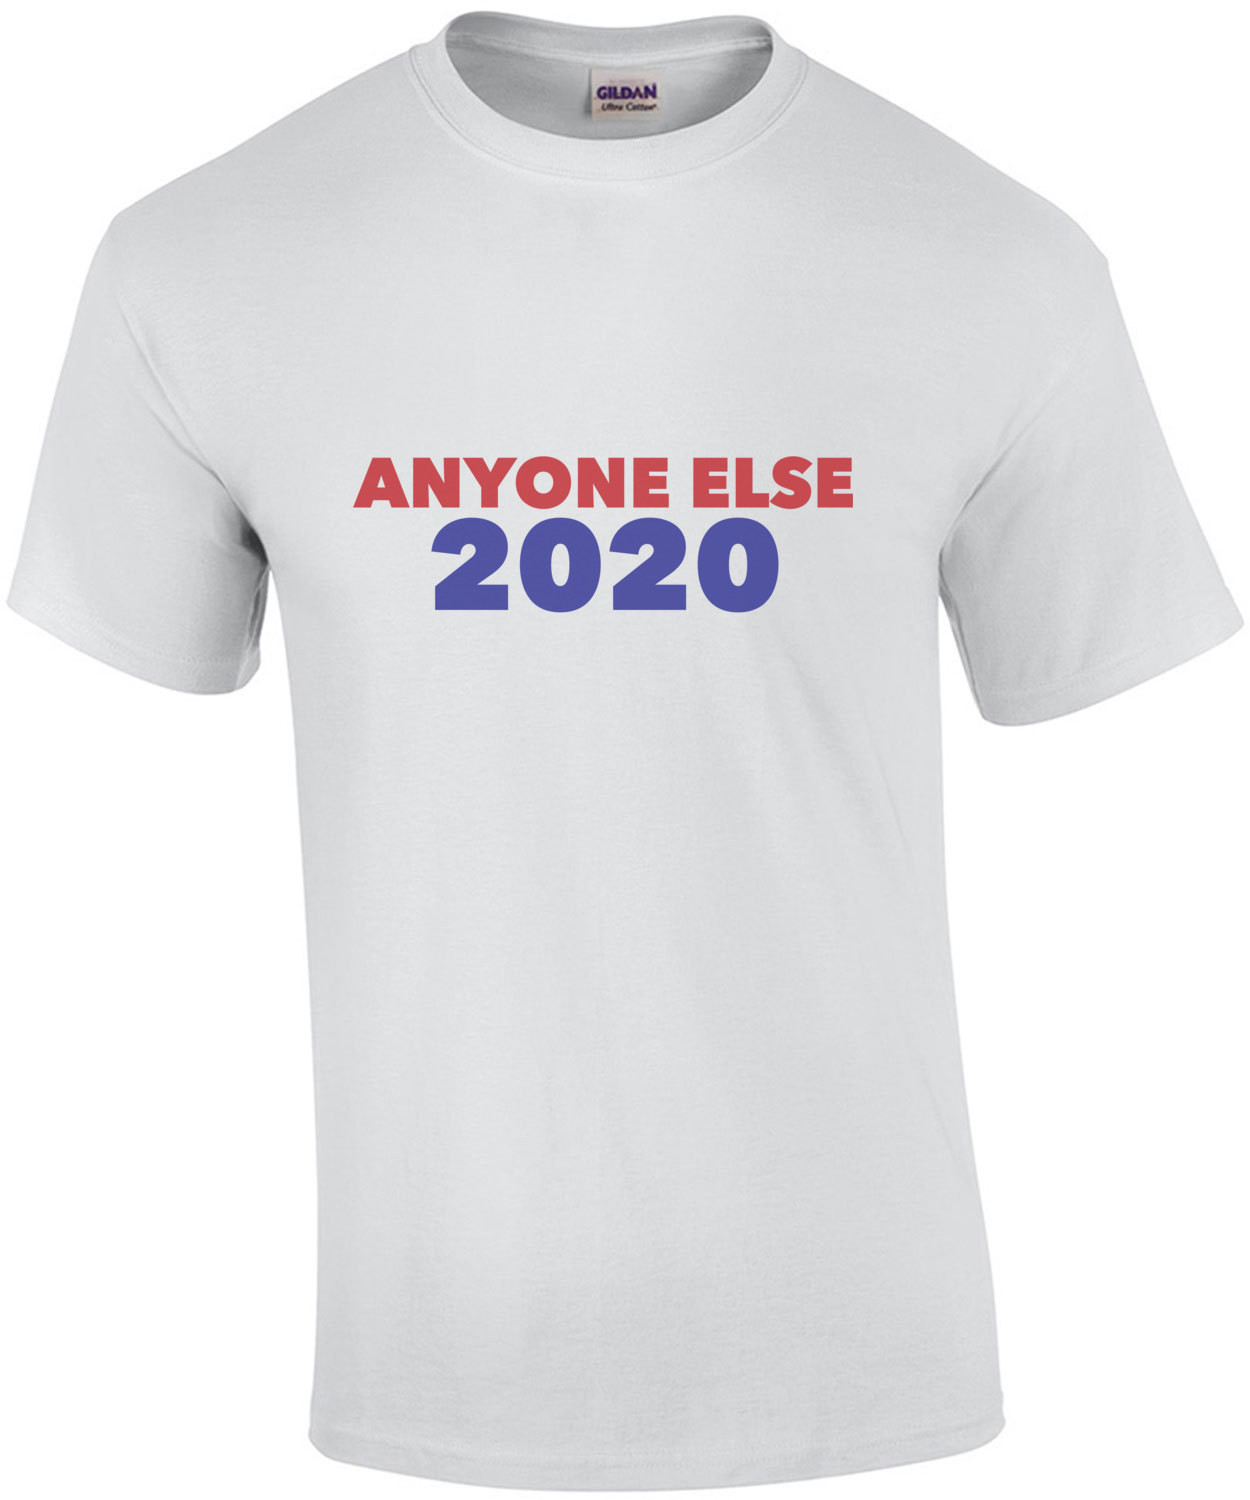 Anyone else 2020 - 2020 Election T-Shirt